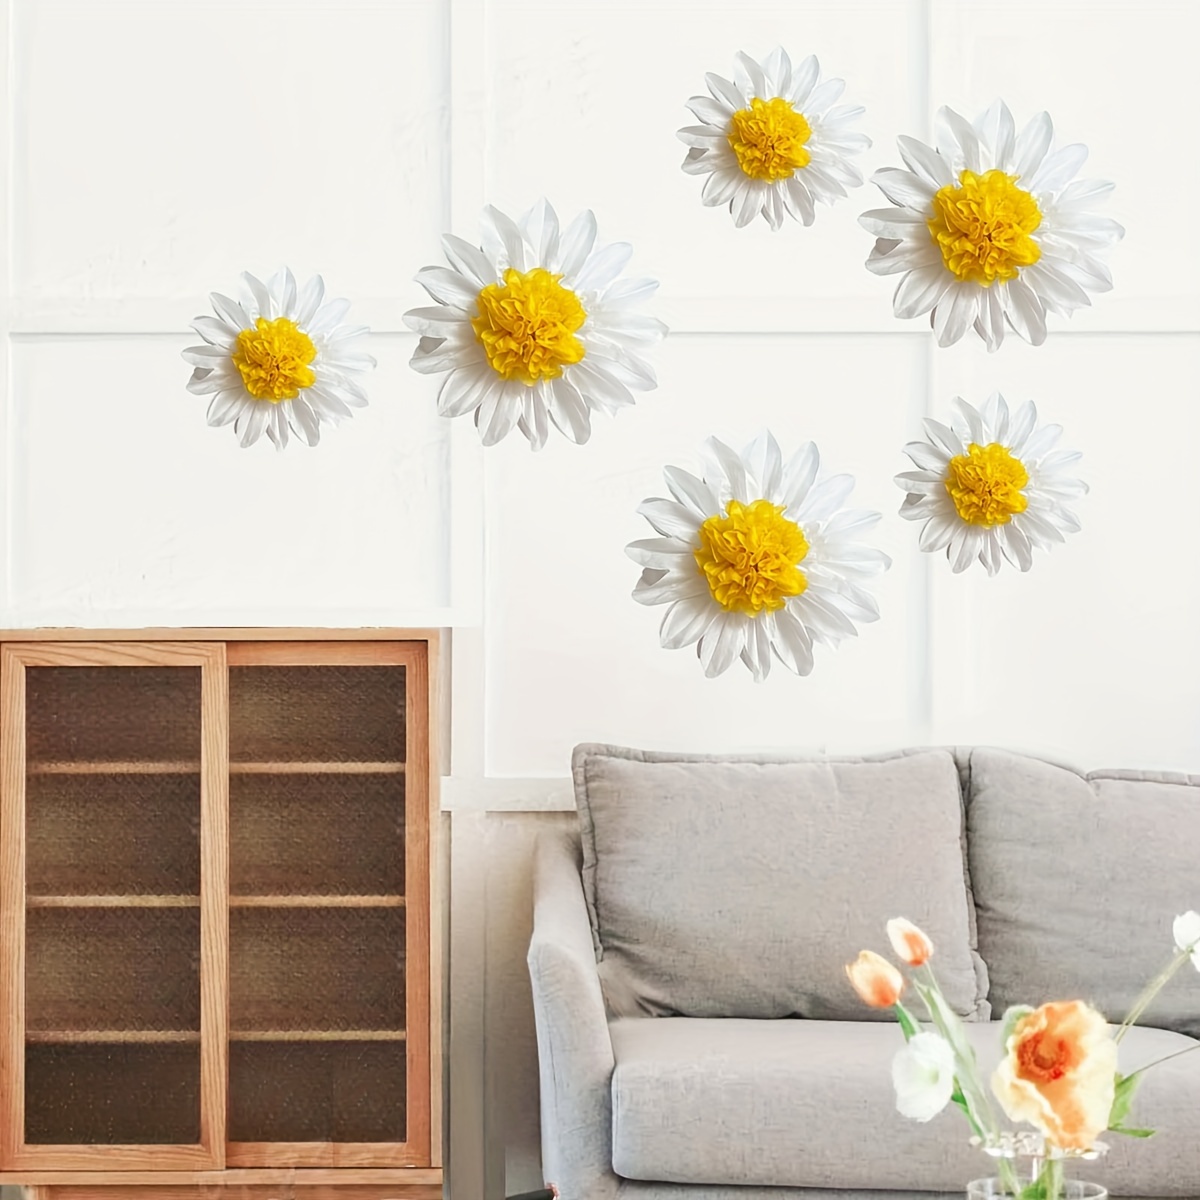 

10-piece Daisy Tissue Paper Pom Poms Set - White & Yellow Flower Wall Decor For Graduation, Birthday, Baby Shower, Wedding, Classroom - 12" (5pcs) + 8" (5pcs) Sizes